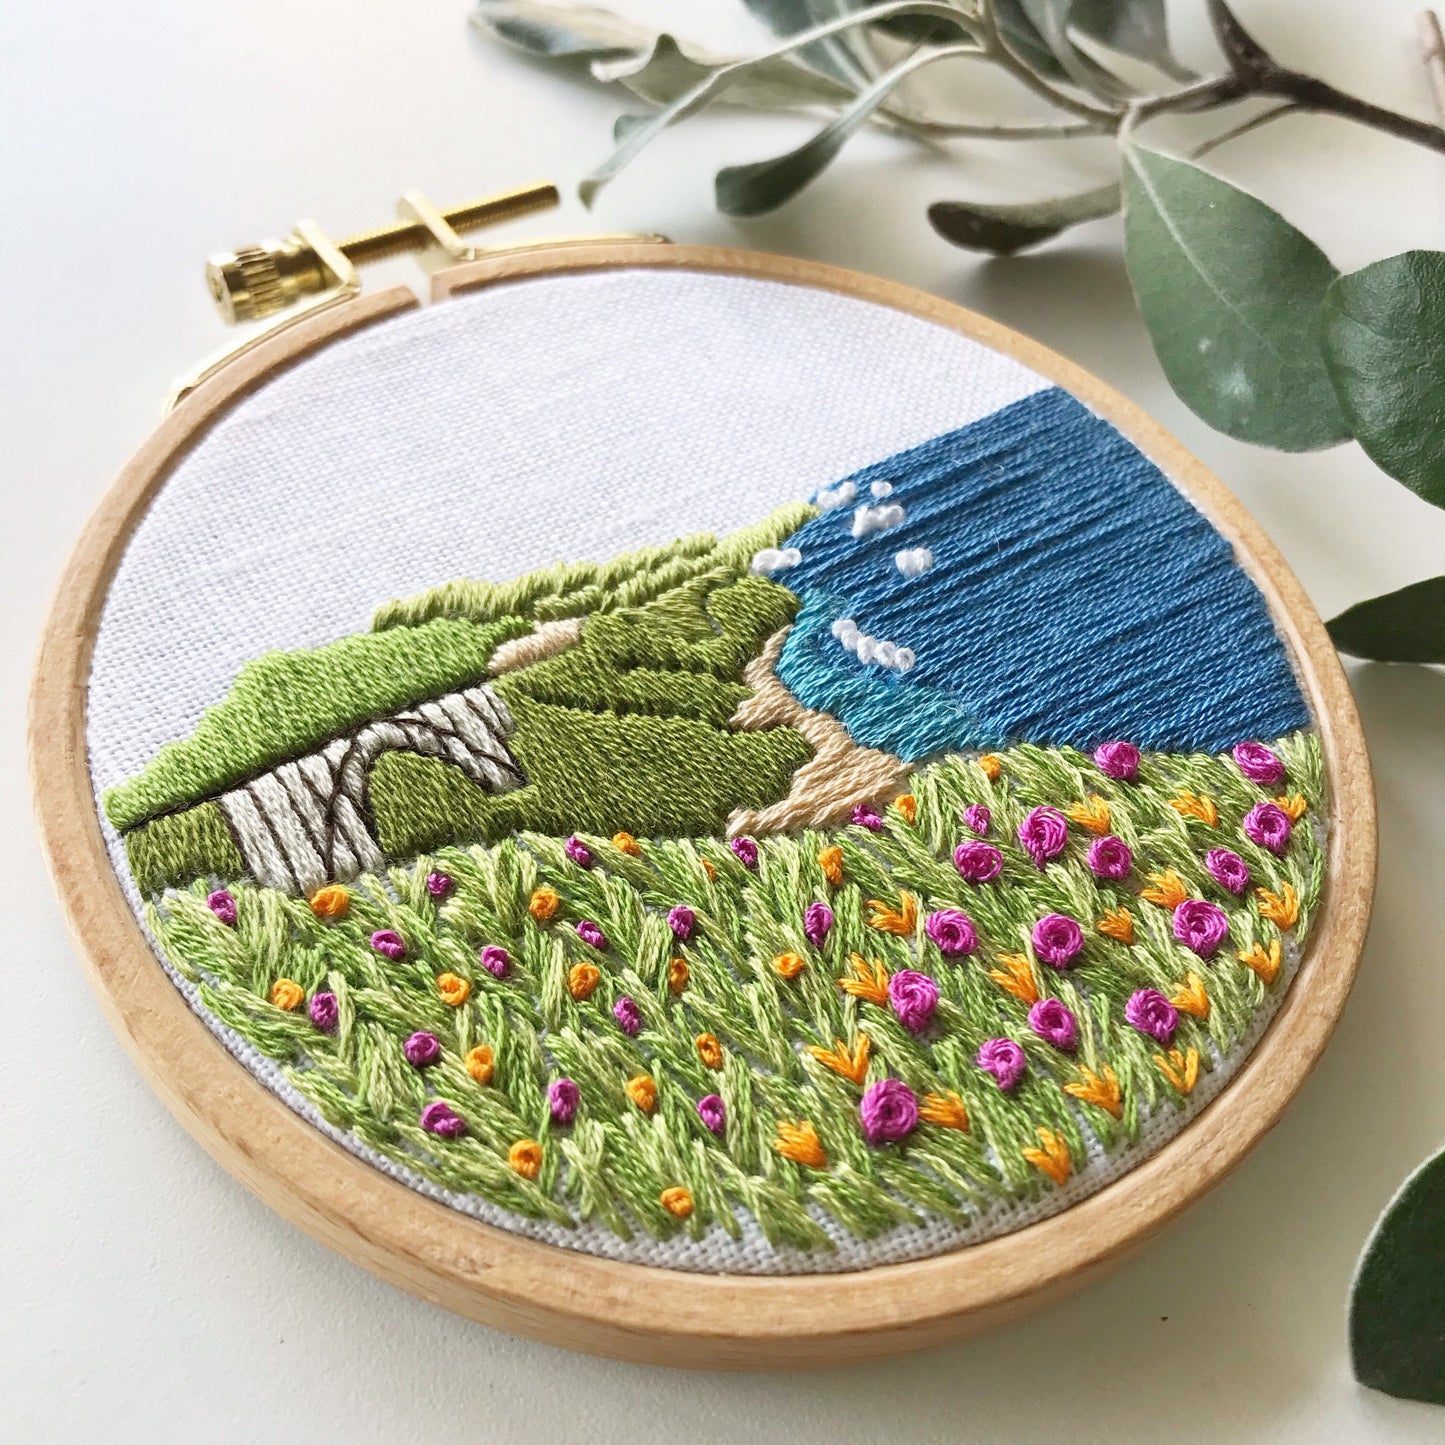 Big Sur: Beginner Embroidery Kit